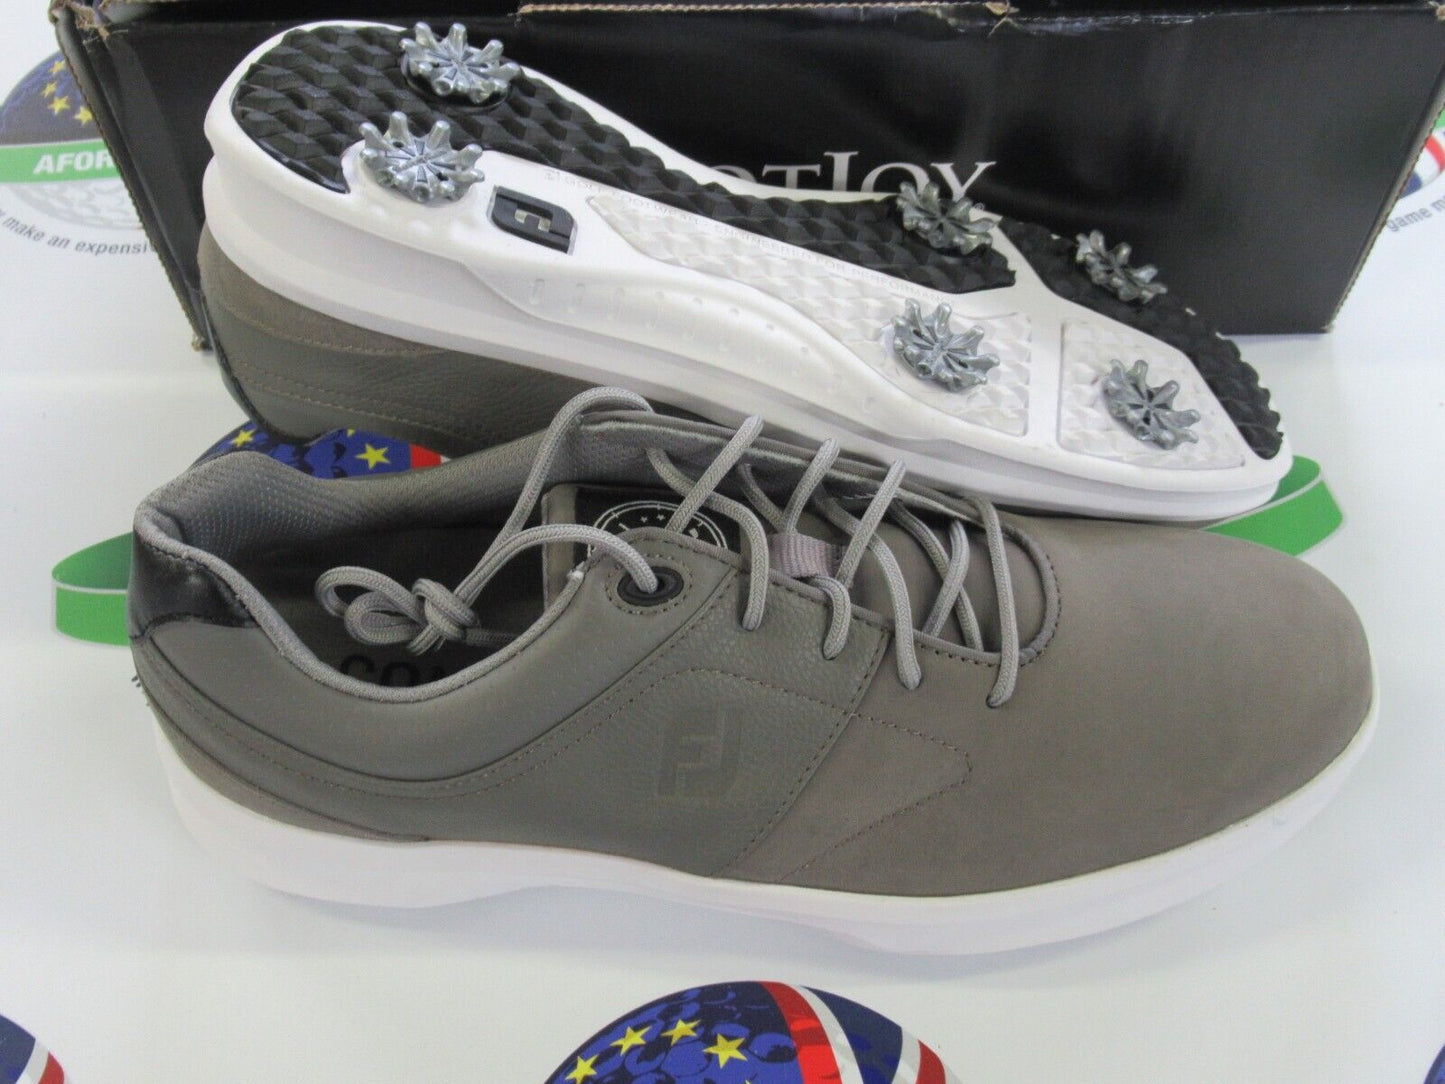 footjoy contour golf shoes 54129k grey uk size 8.5 medium